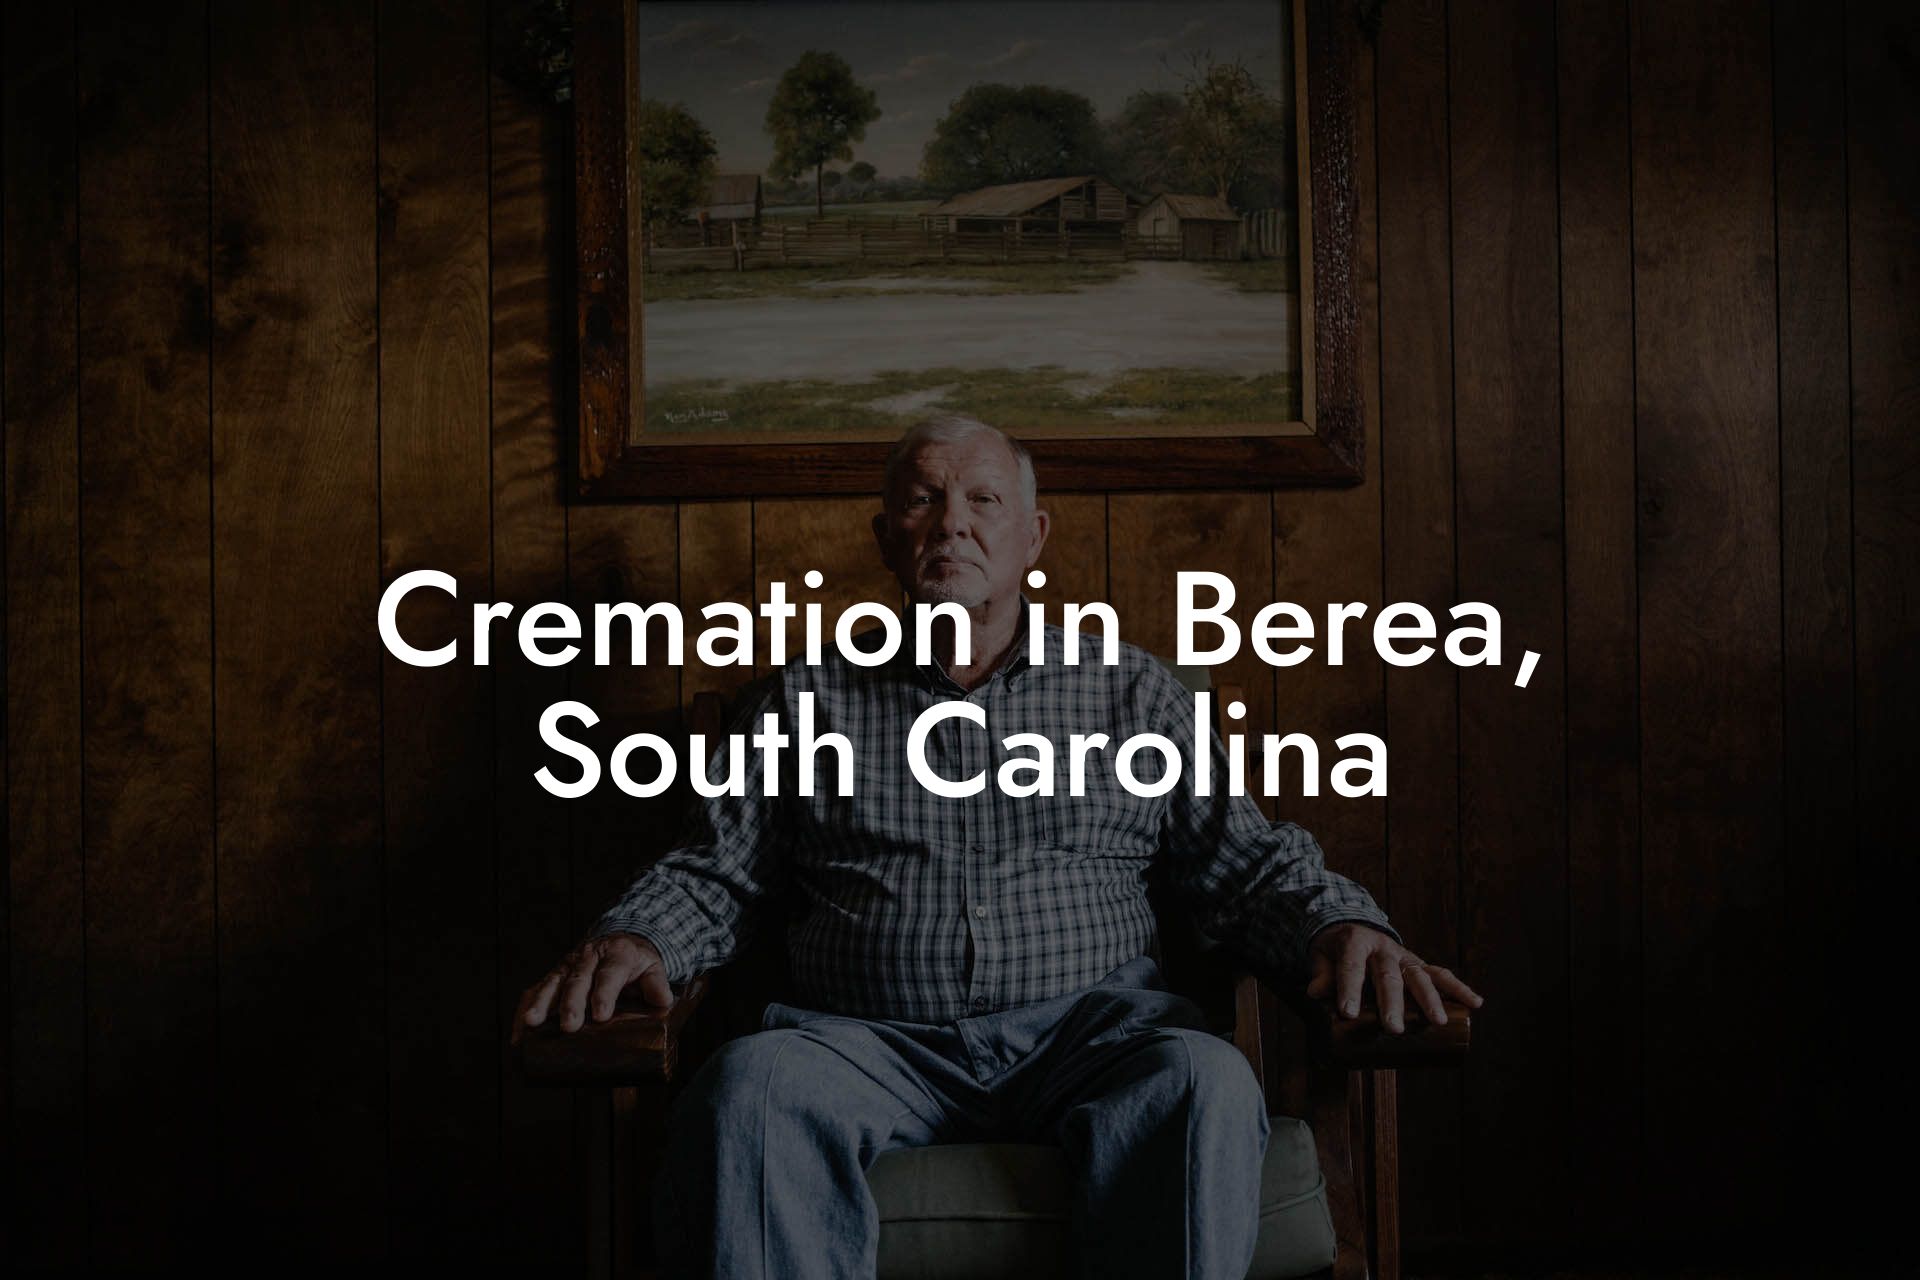 Cremation in Berea, South Carolina